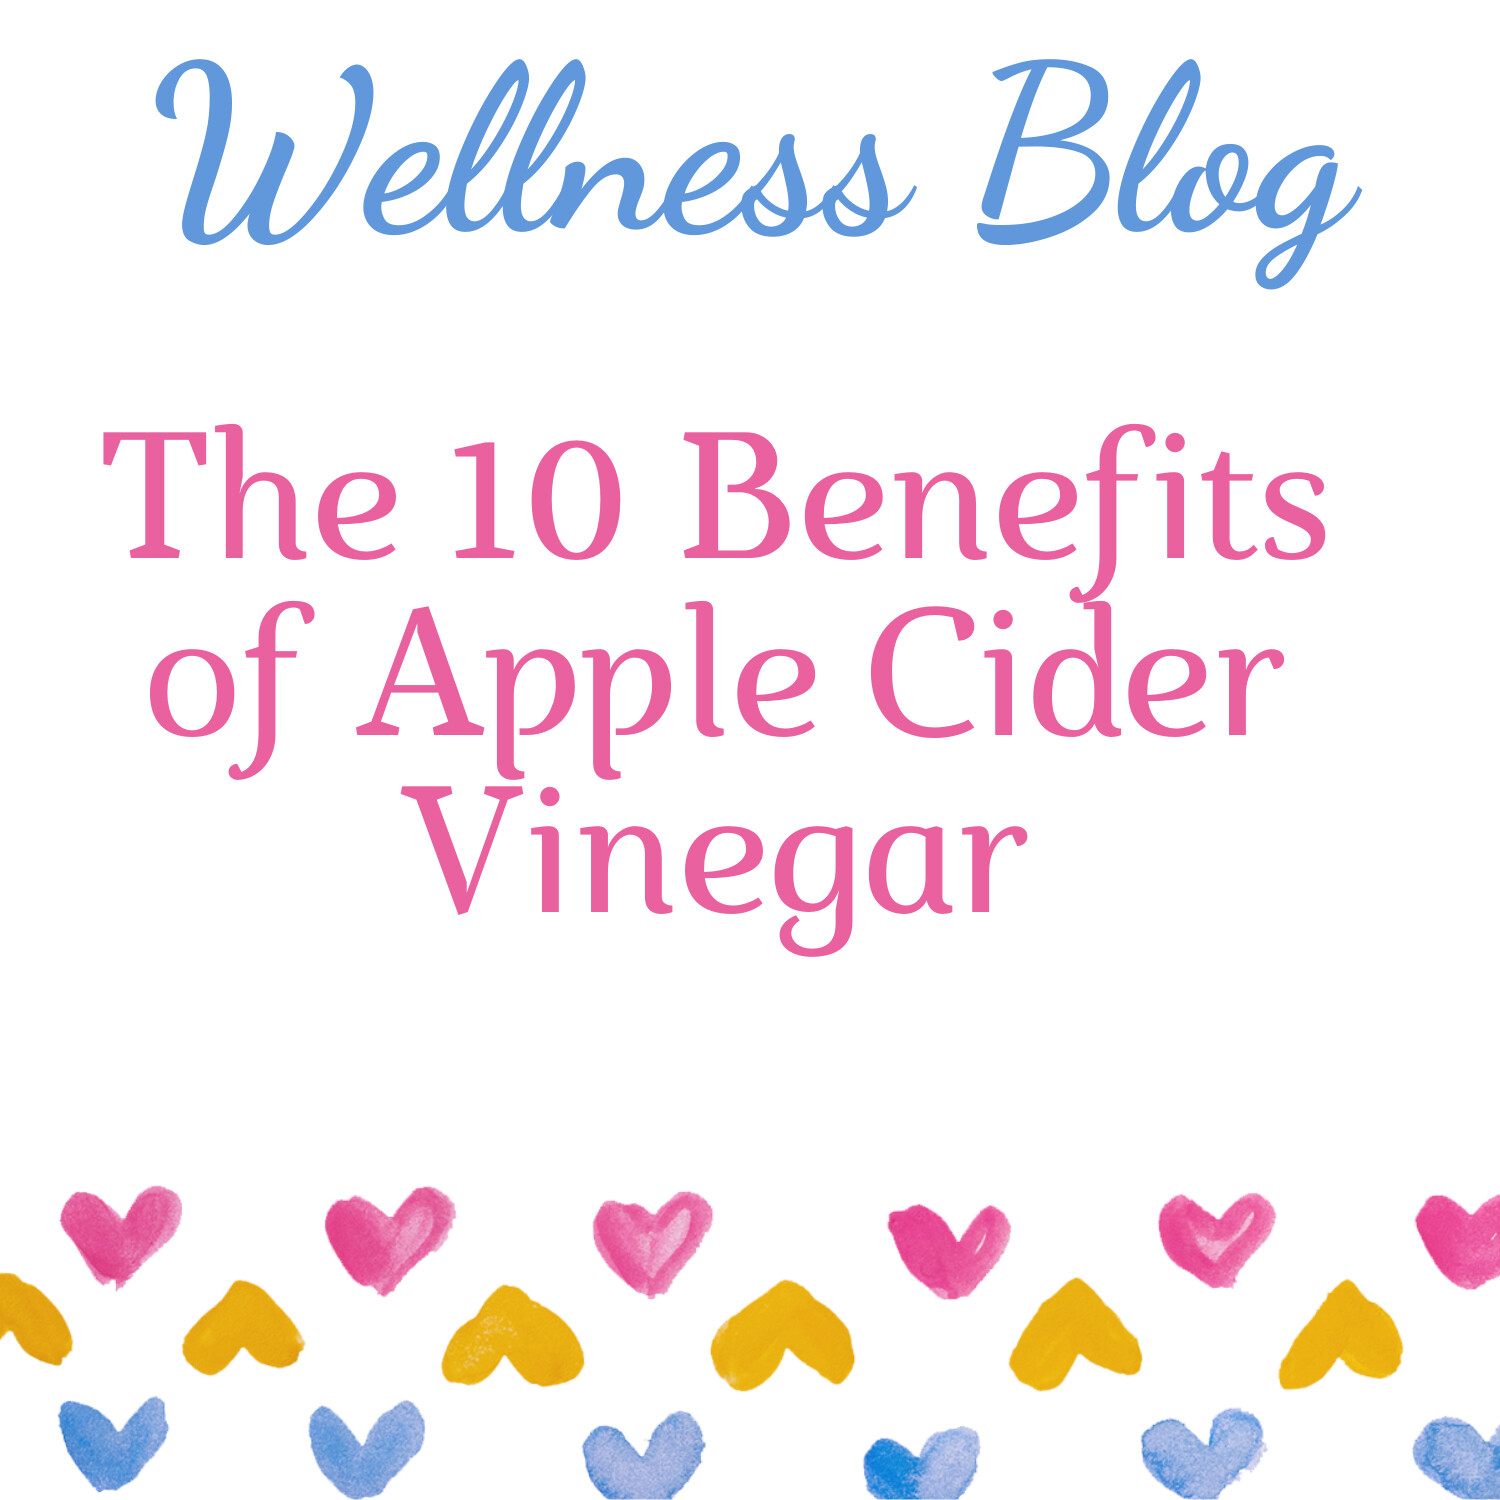 Apple Cider Vinegar - 10 Health Benefits 